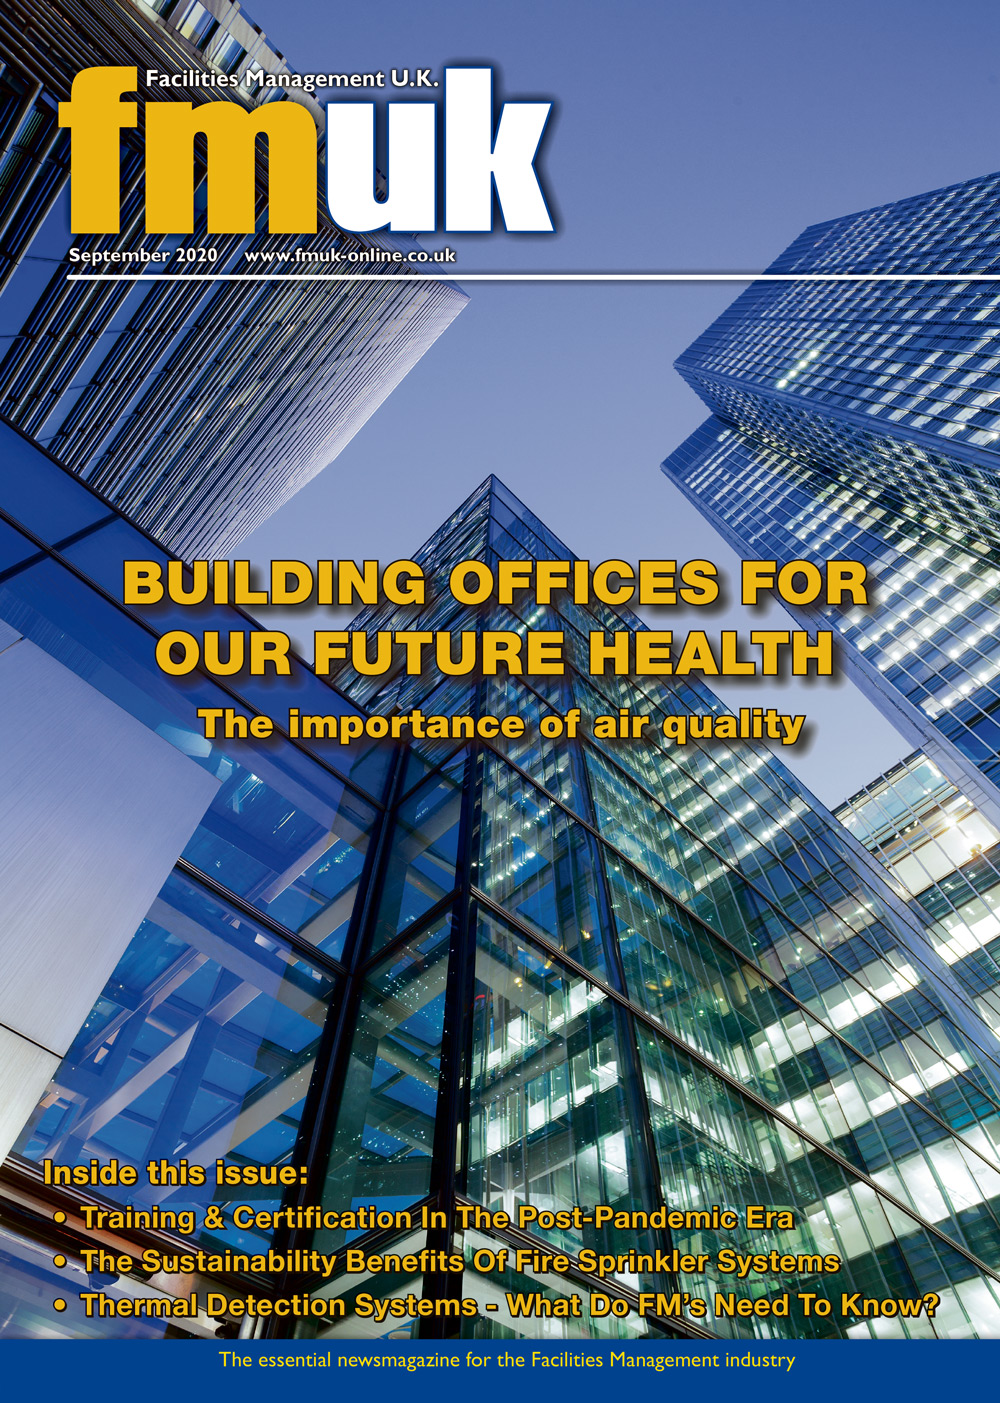 Facilities Management UK (FMUK) September 2020 issue